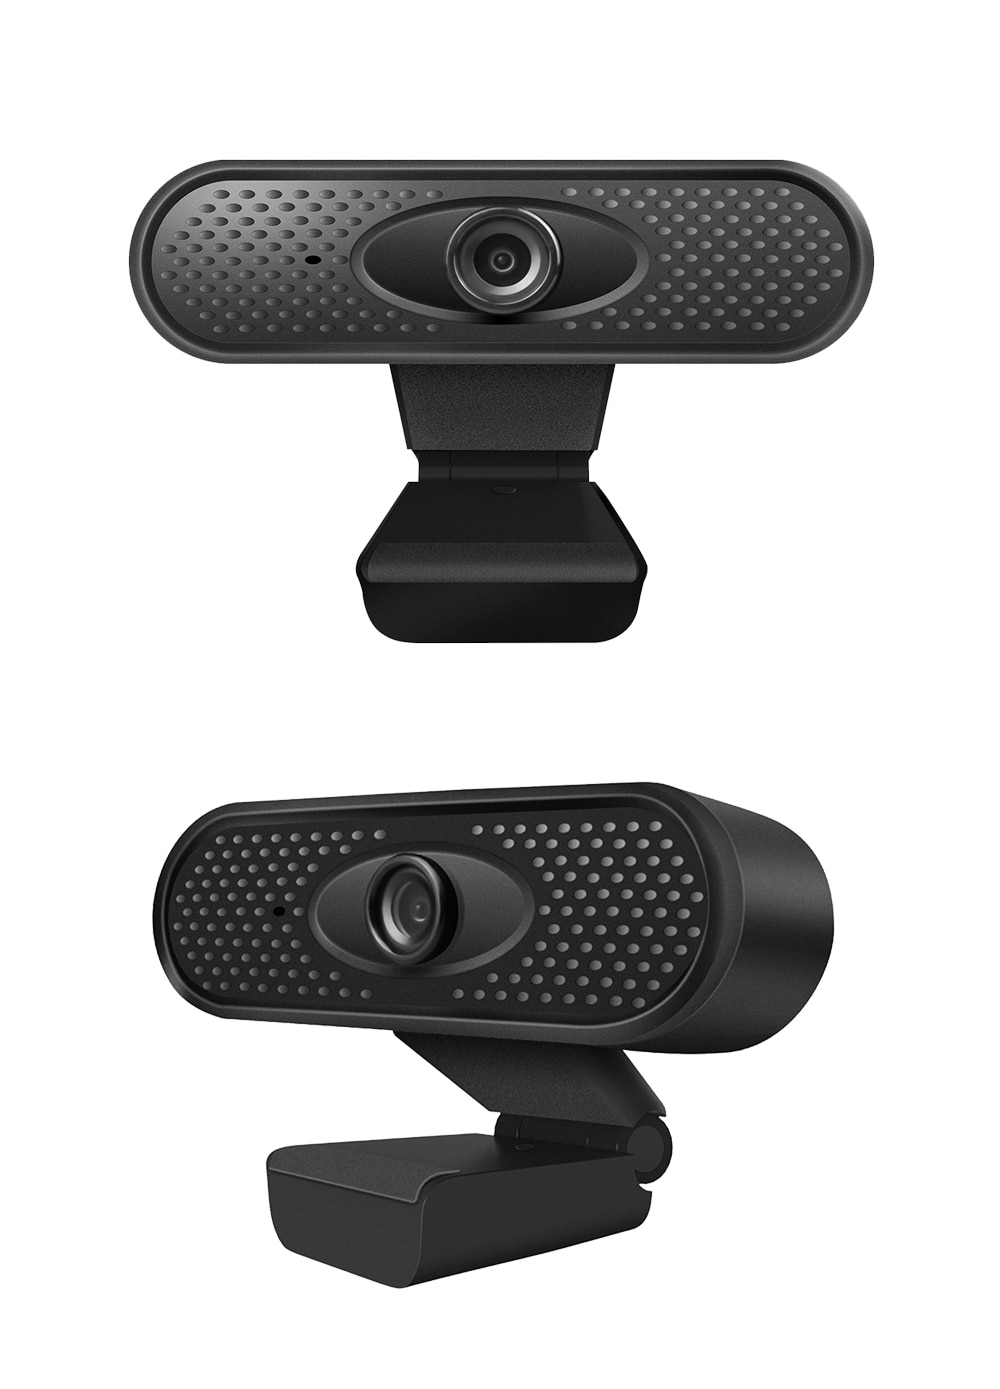 TISHRIC Flexible USB Webcam HD/1080P/PC Web Camera With Microphone Web Cam USB Camera for Computer Webcamera Full HD Video